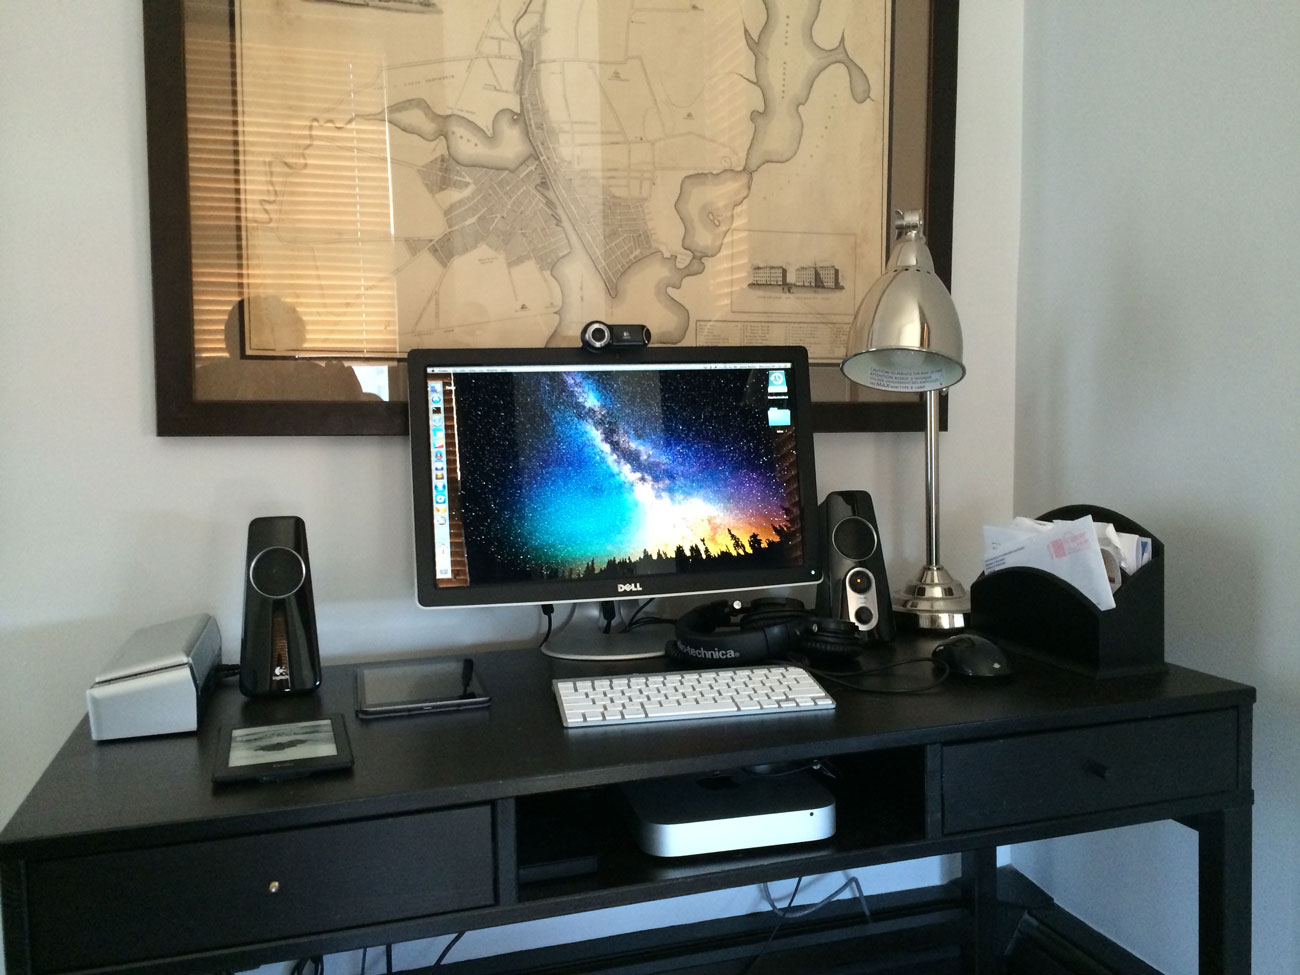 Jason Becker's Mac setup